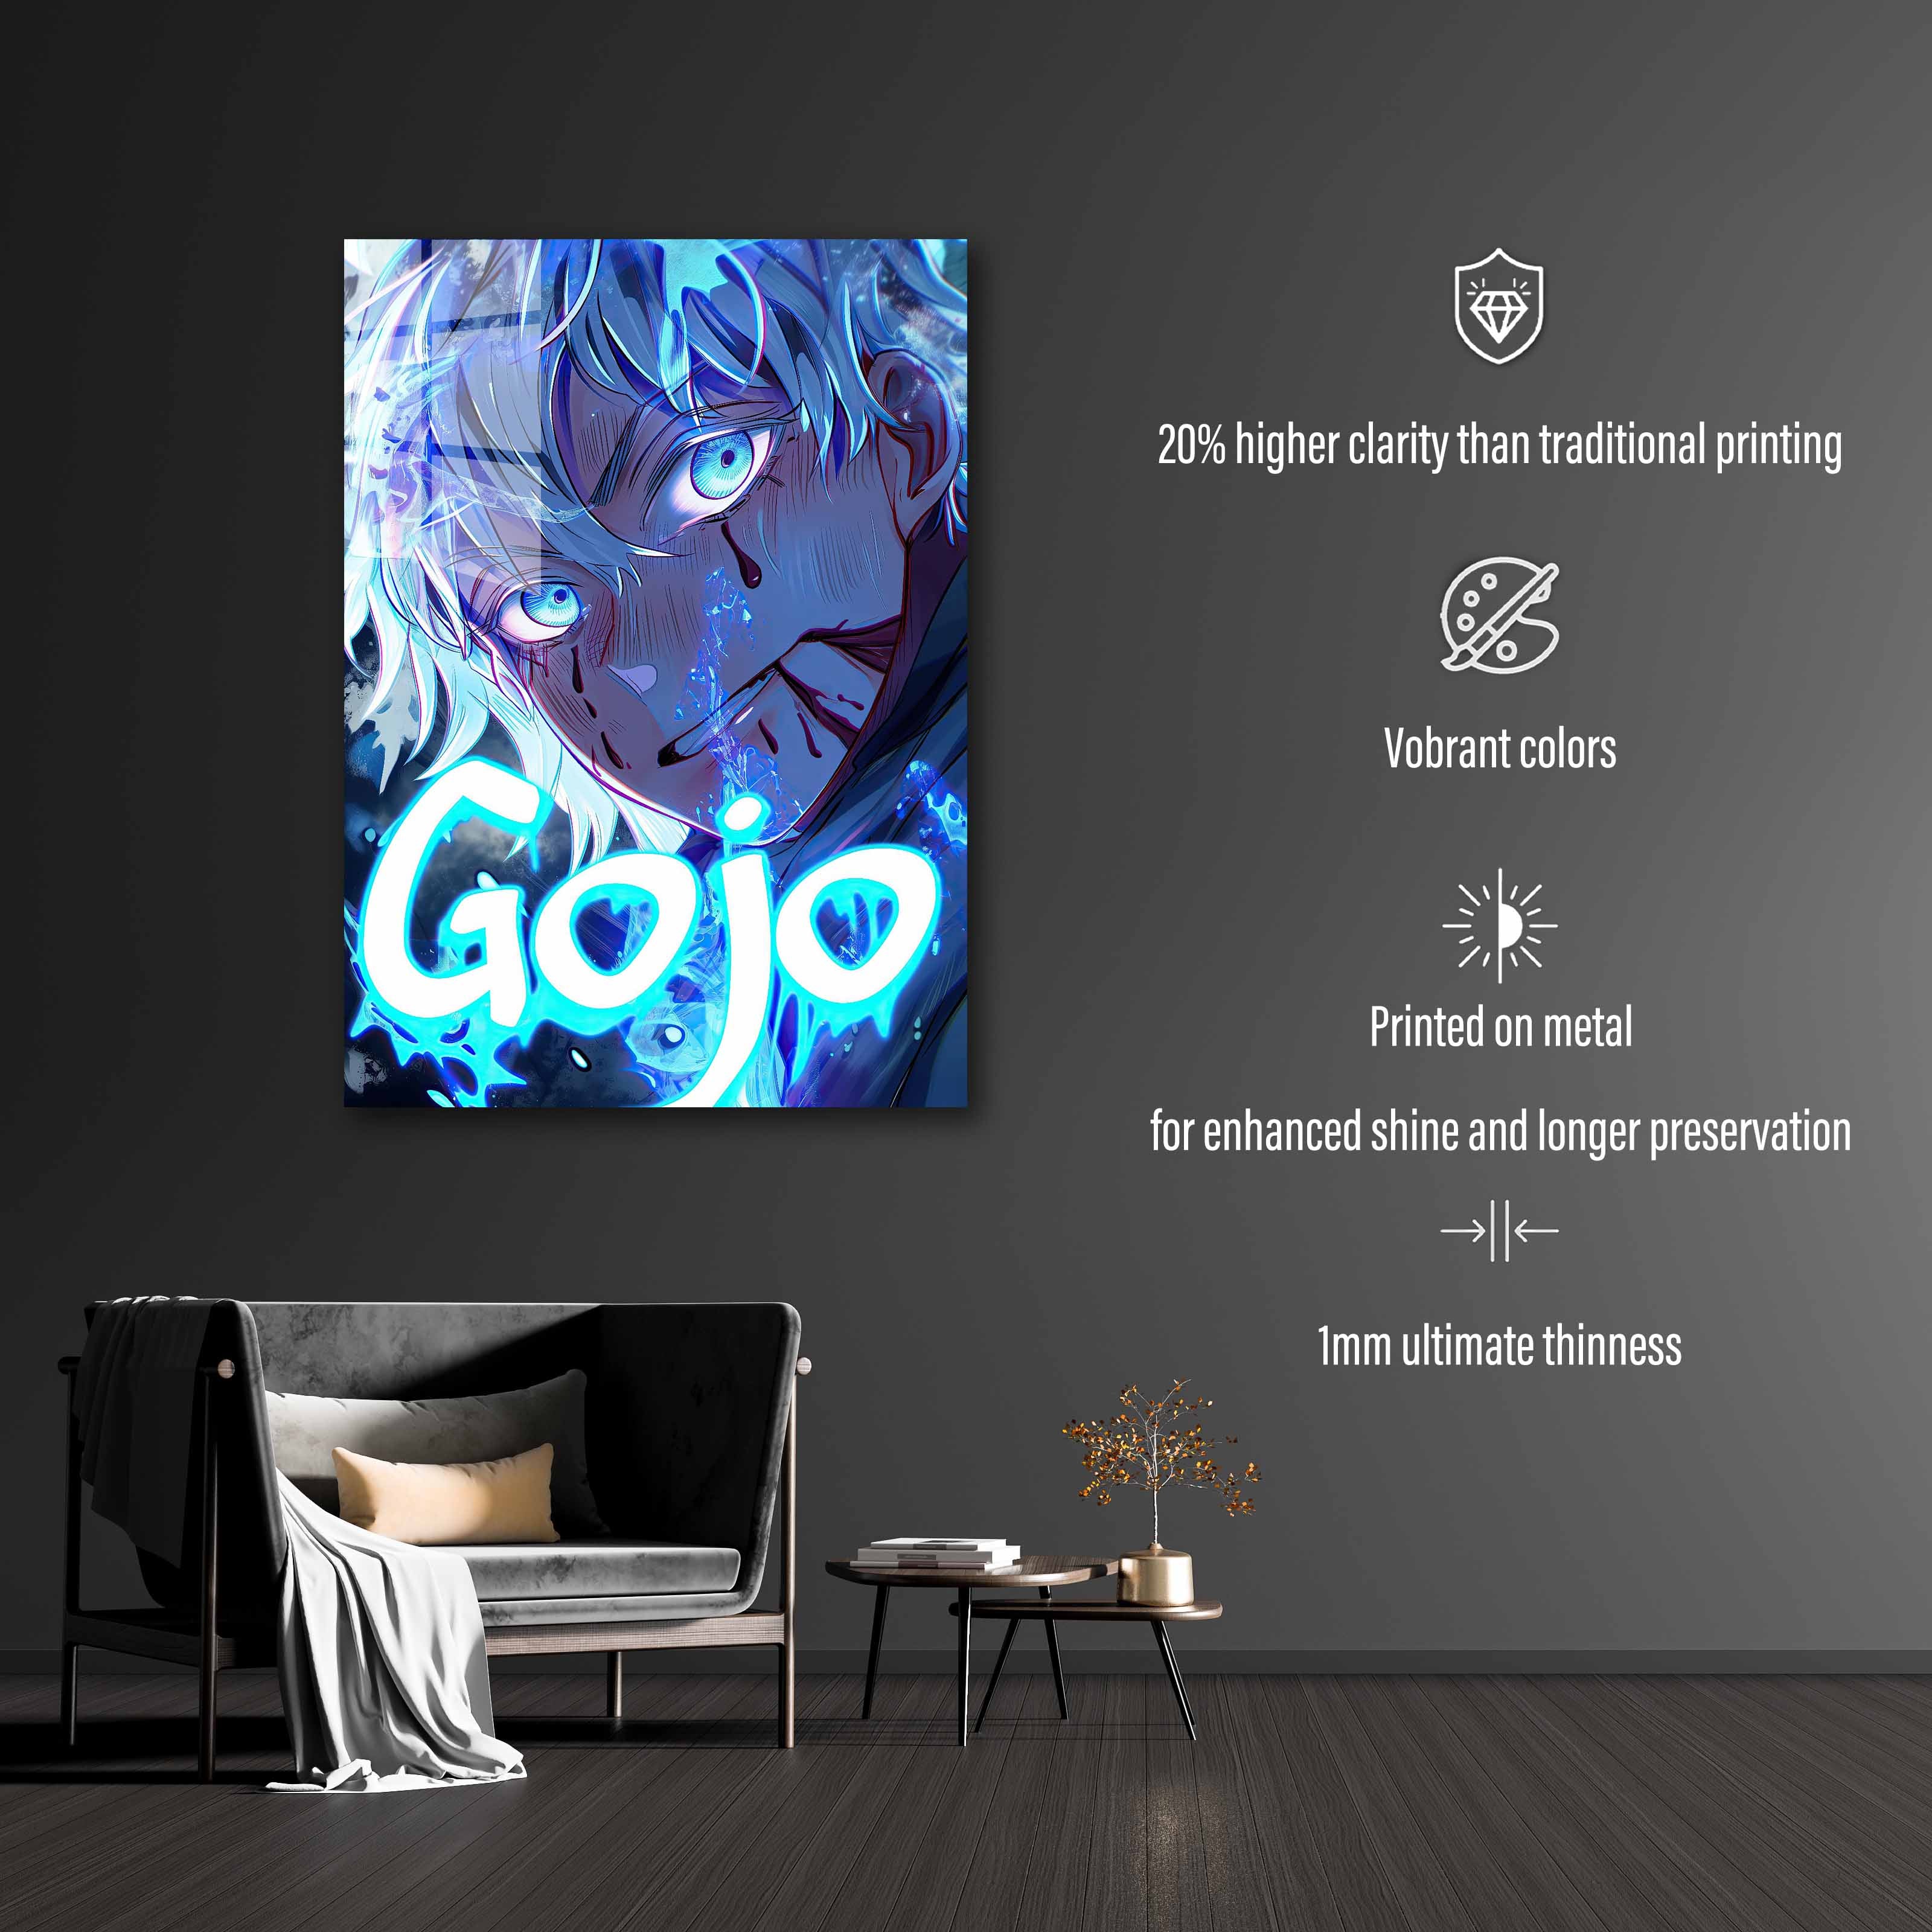 Gojo ConceptArt from jujutsu kaisen 3-designed by @Silentheal